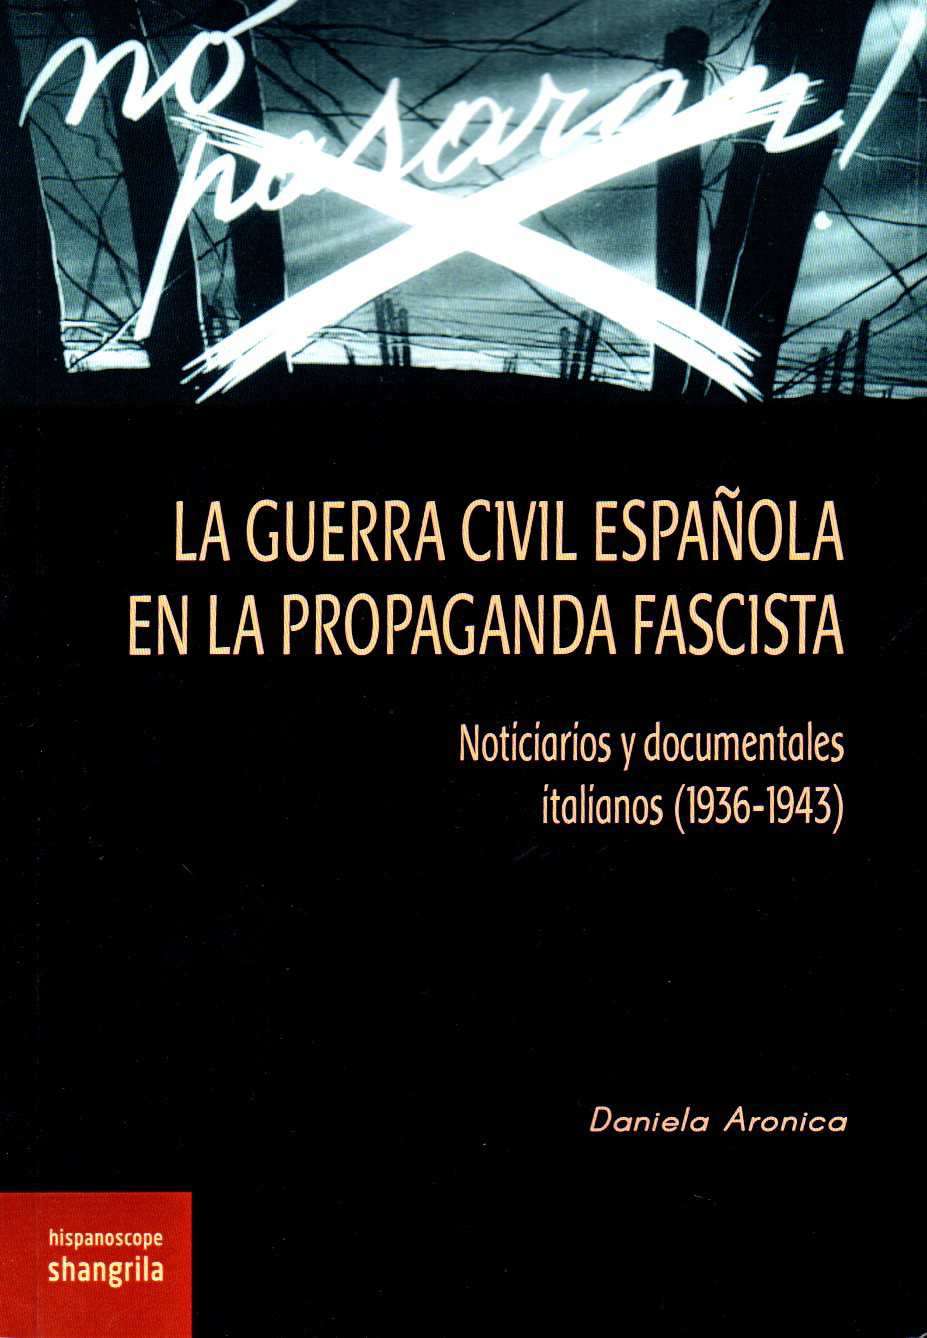 Guerra civil española en la propaganda fascista